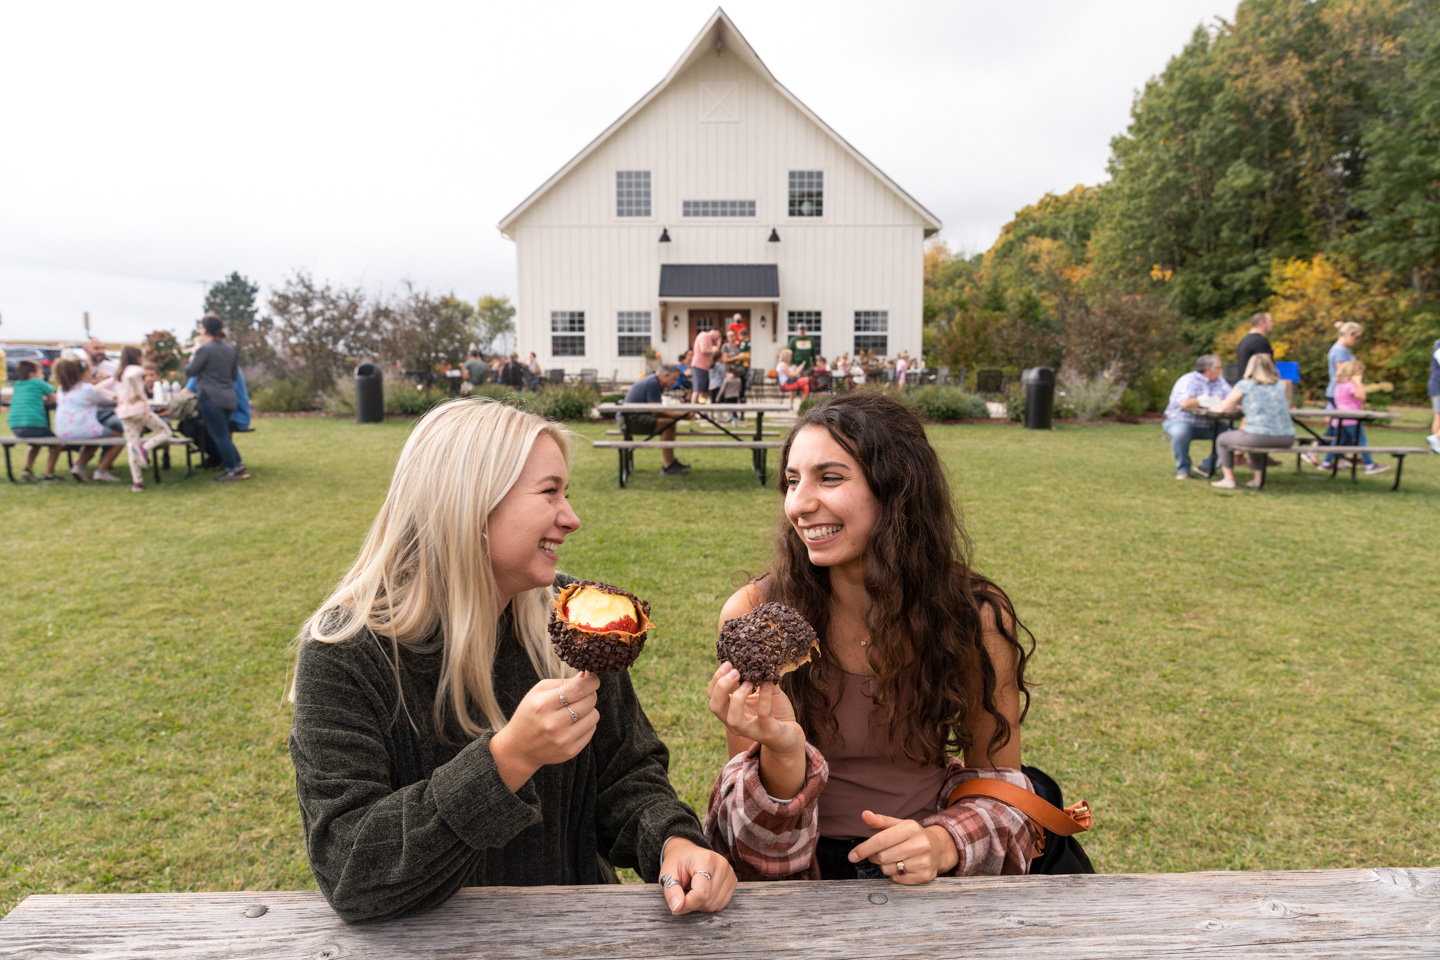 farm photographer - two women enjoy eating caramel apples